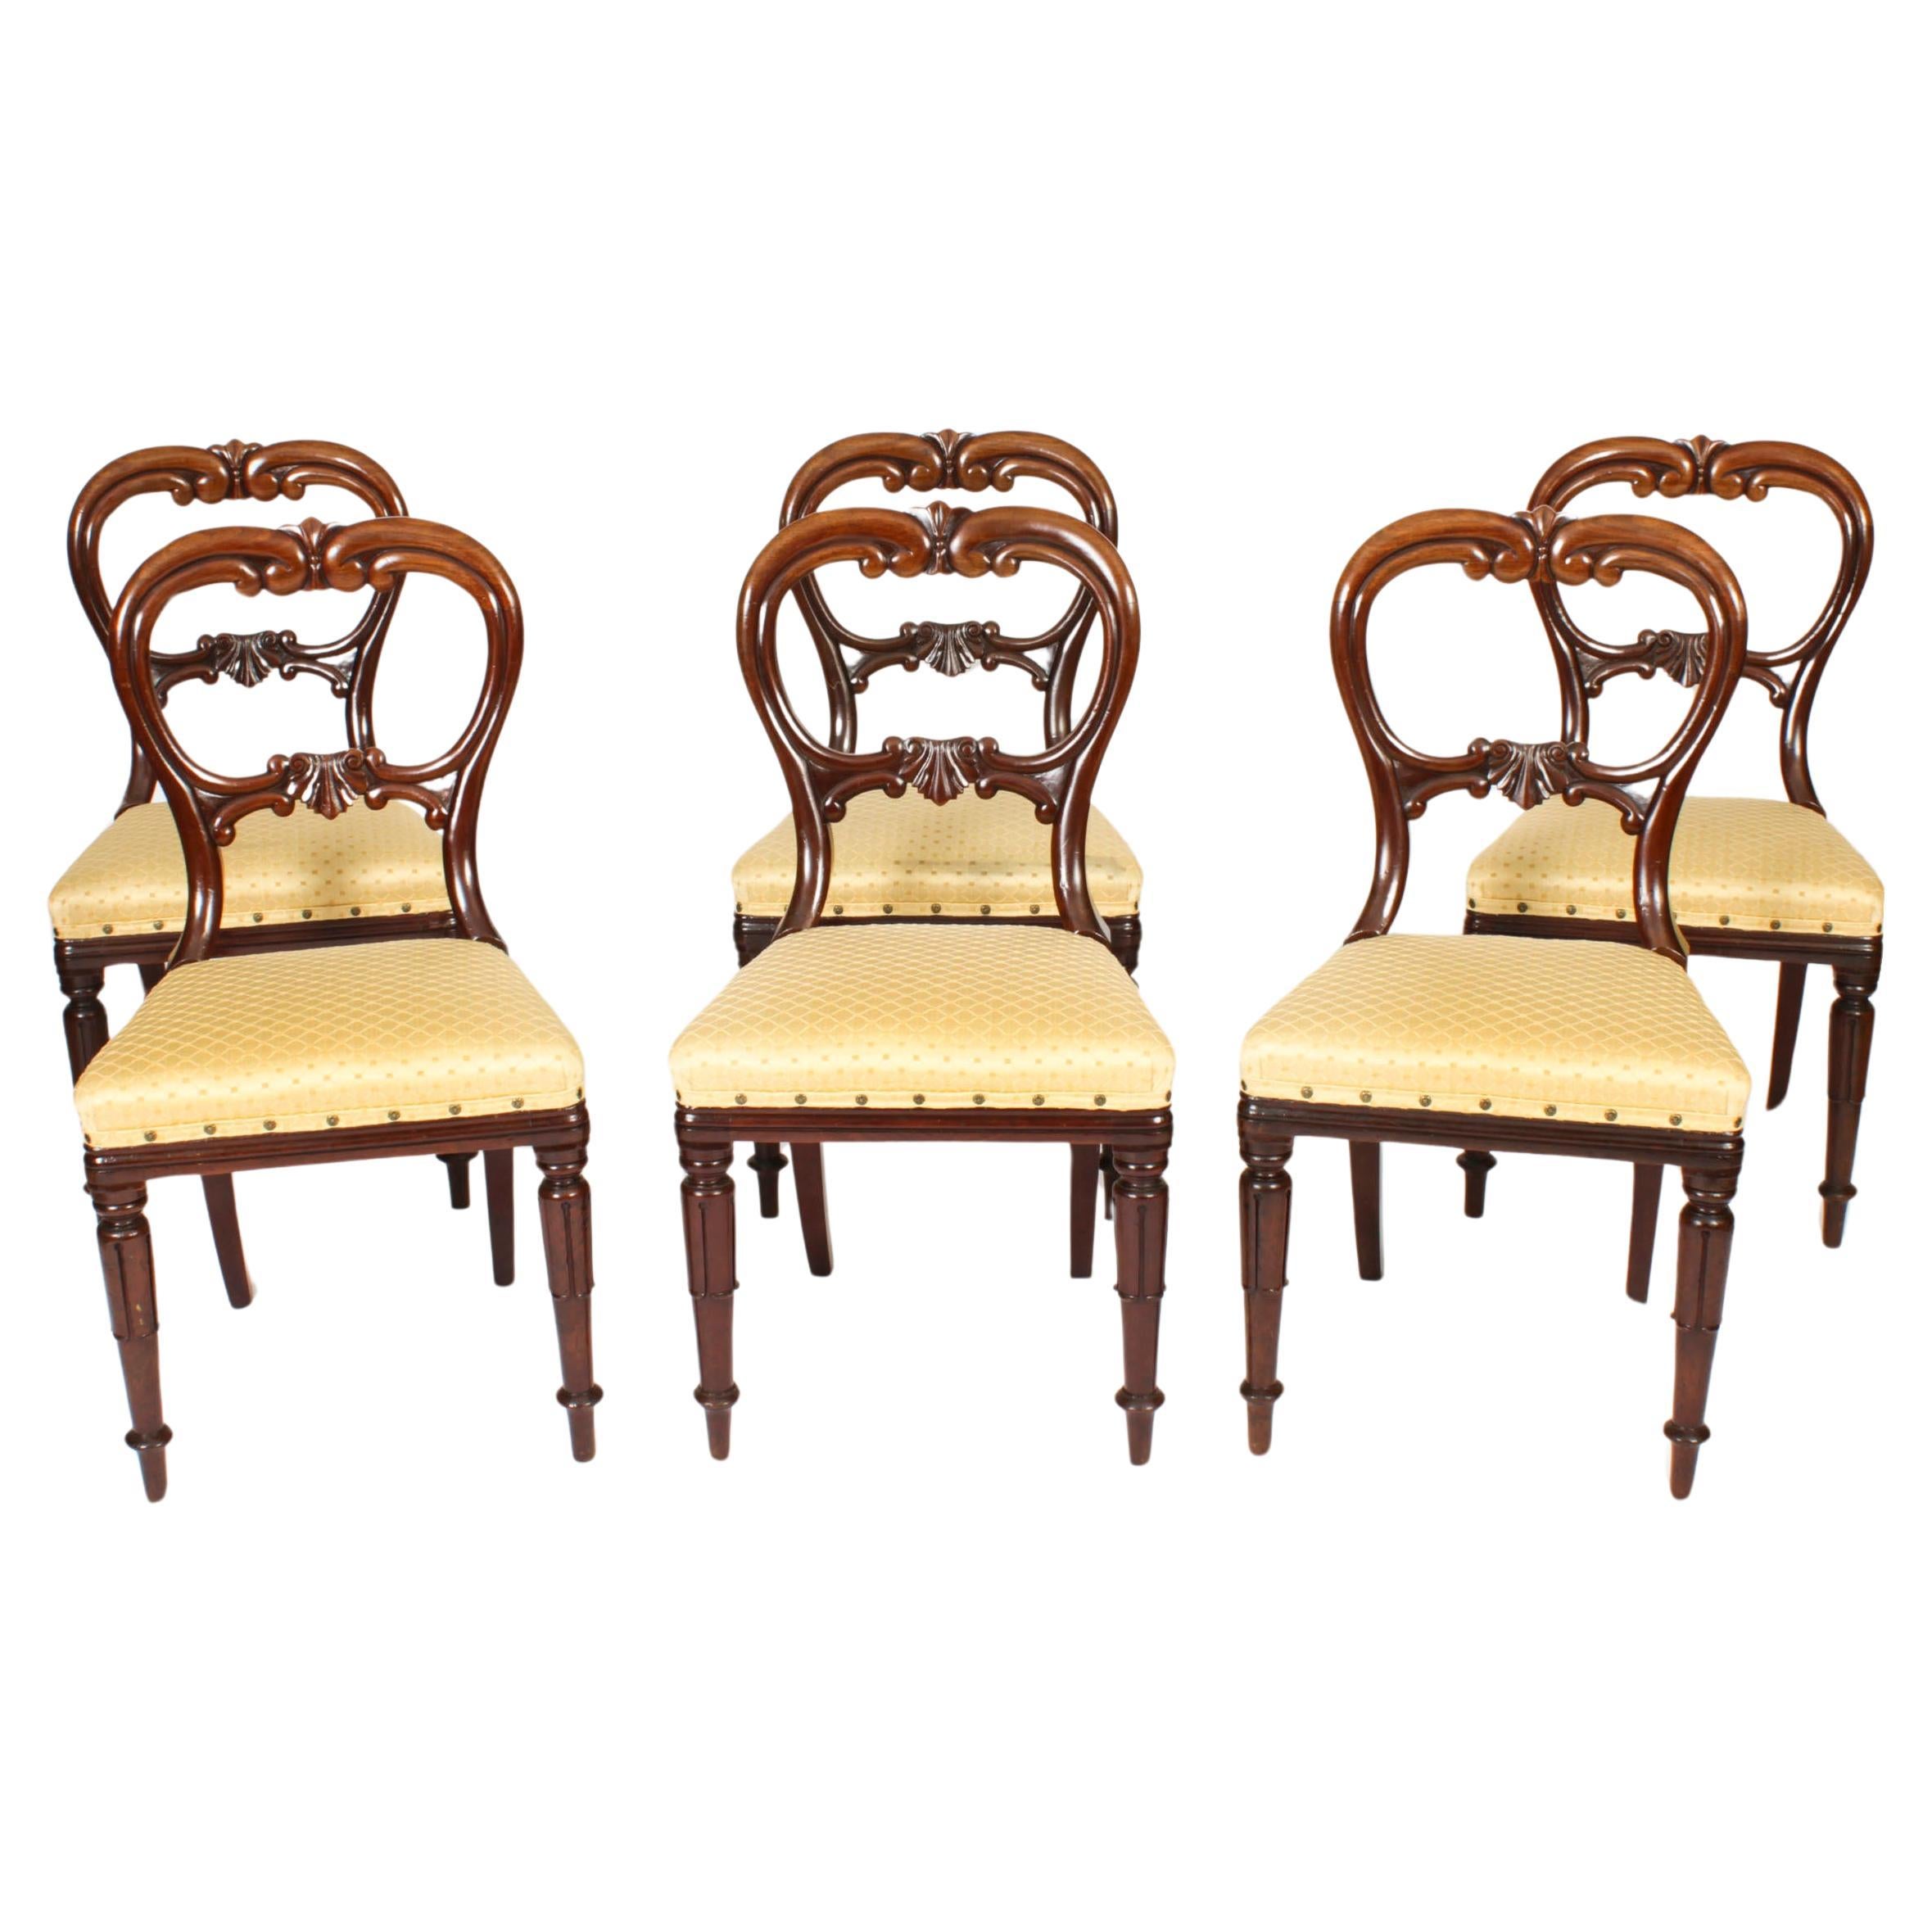 Antique Set of 6 William IV Mahogany Dining Chairs c1830 19th Century